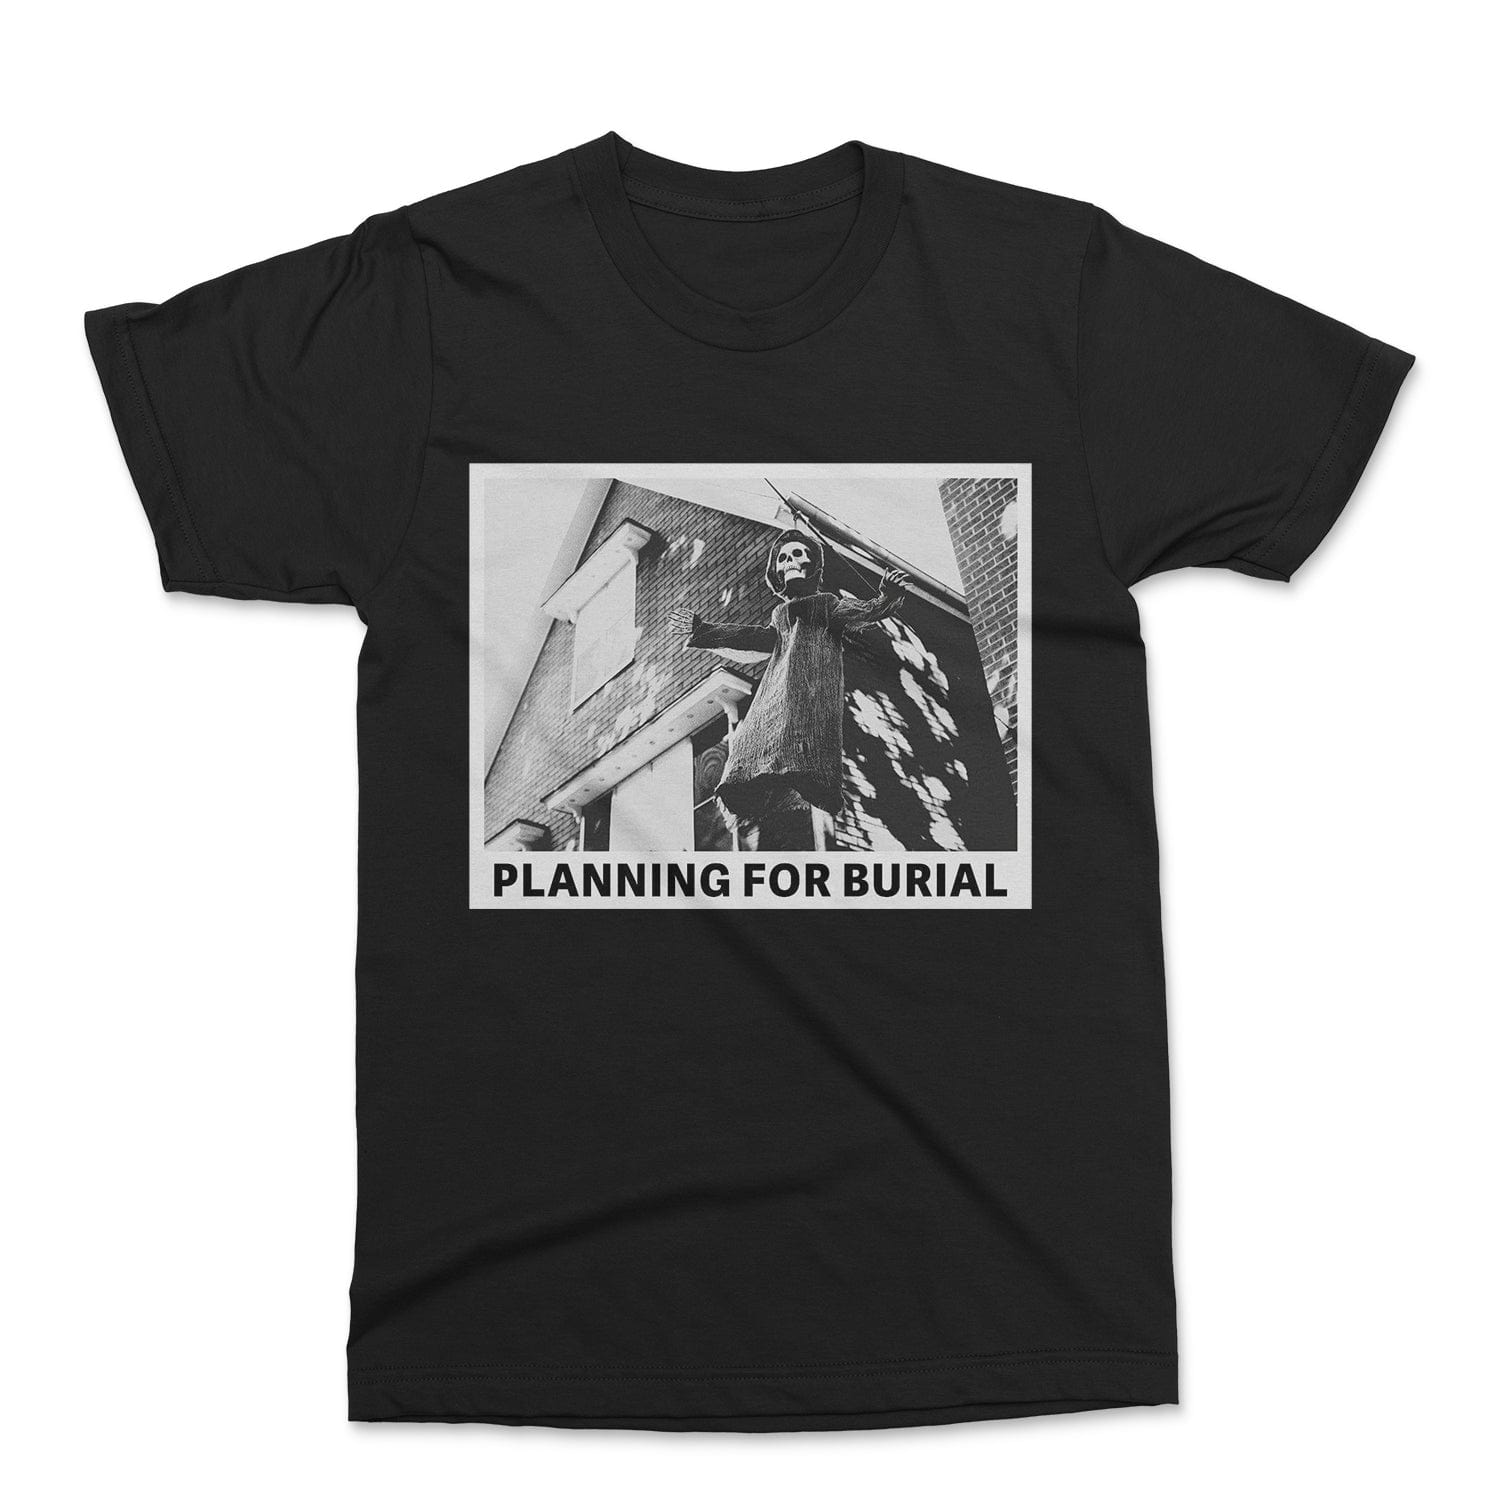 The Flenser Apparel Planning for Burial "Big House" Shirt